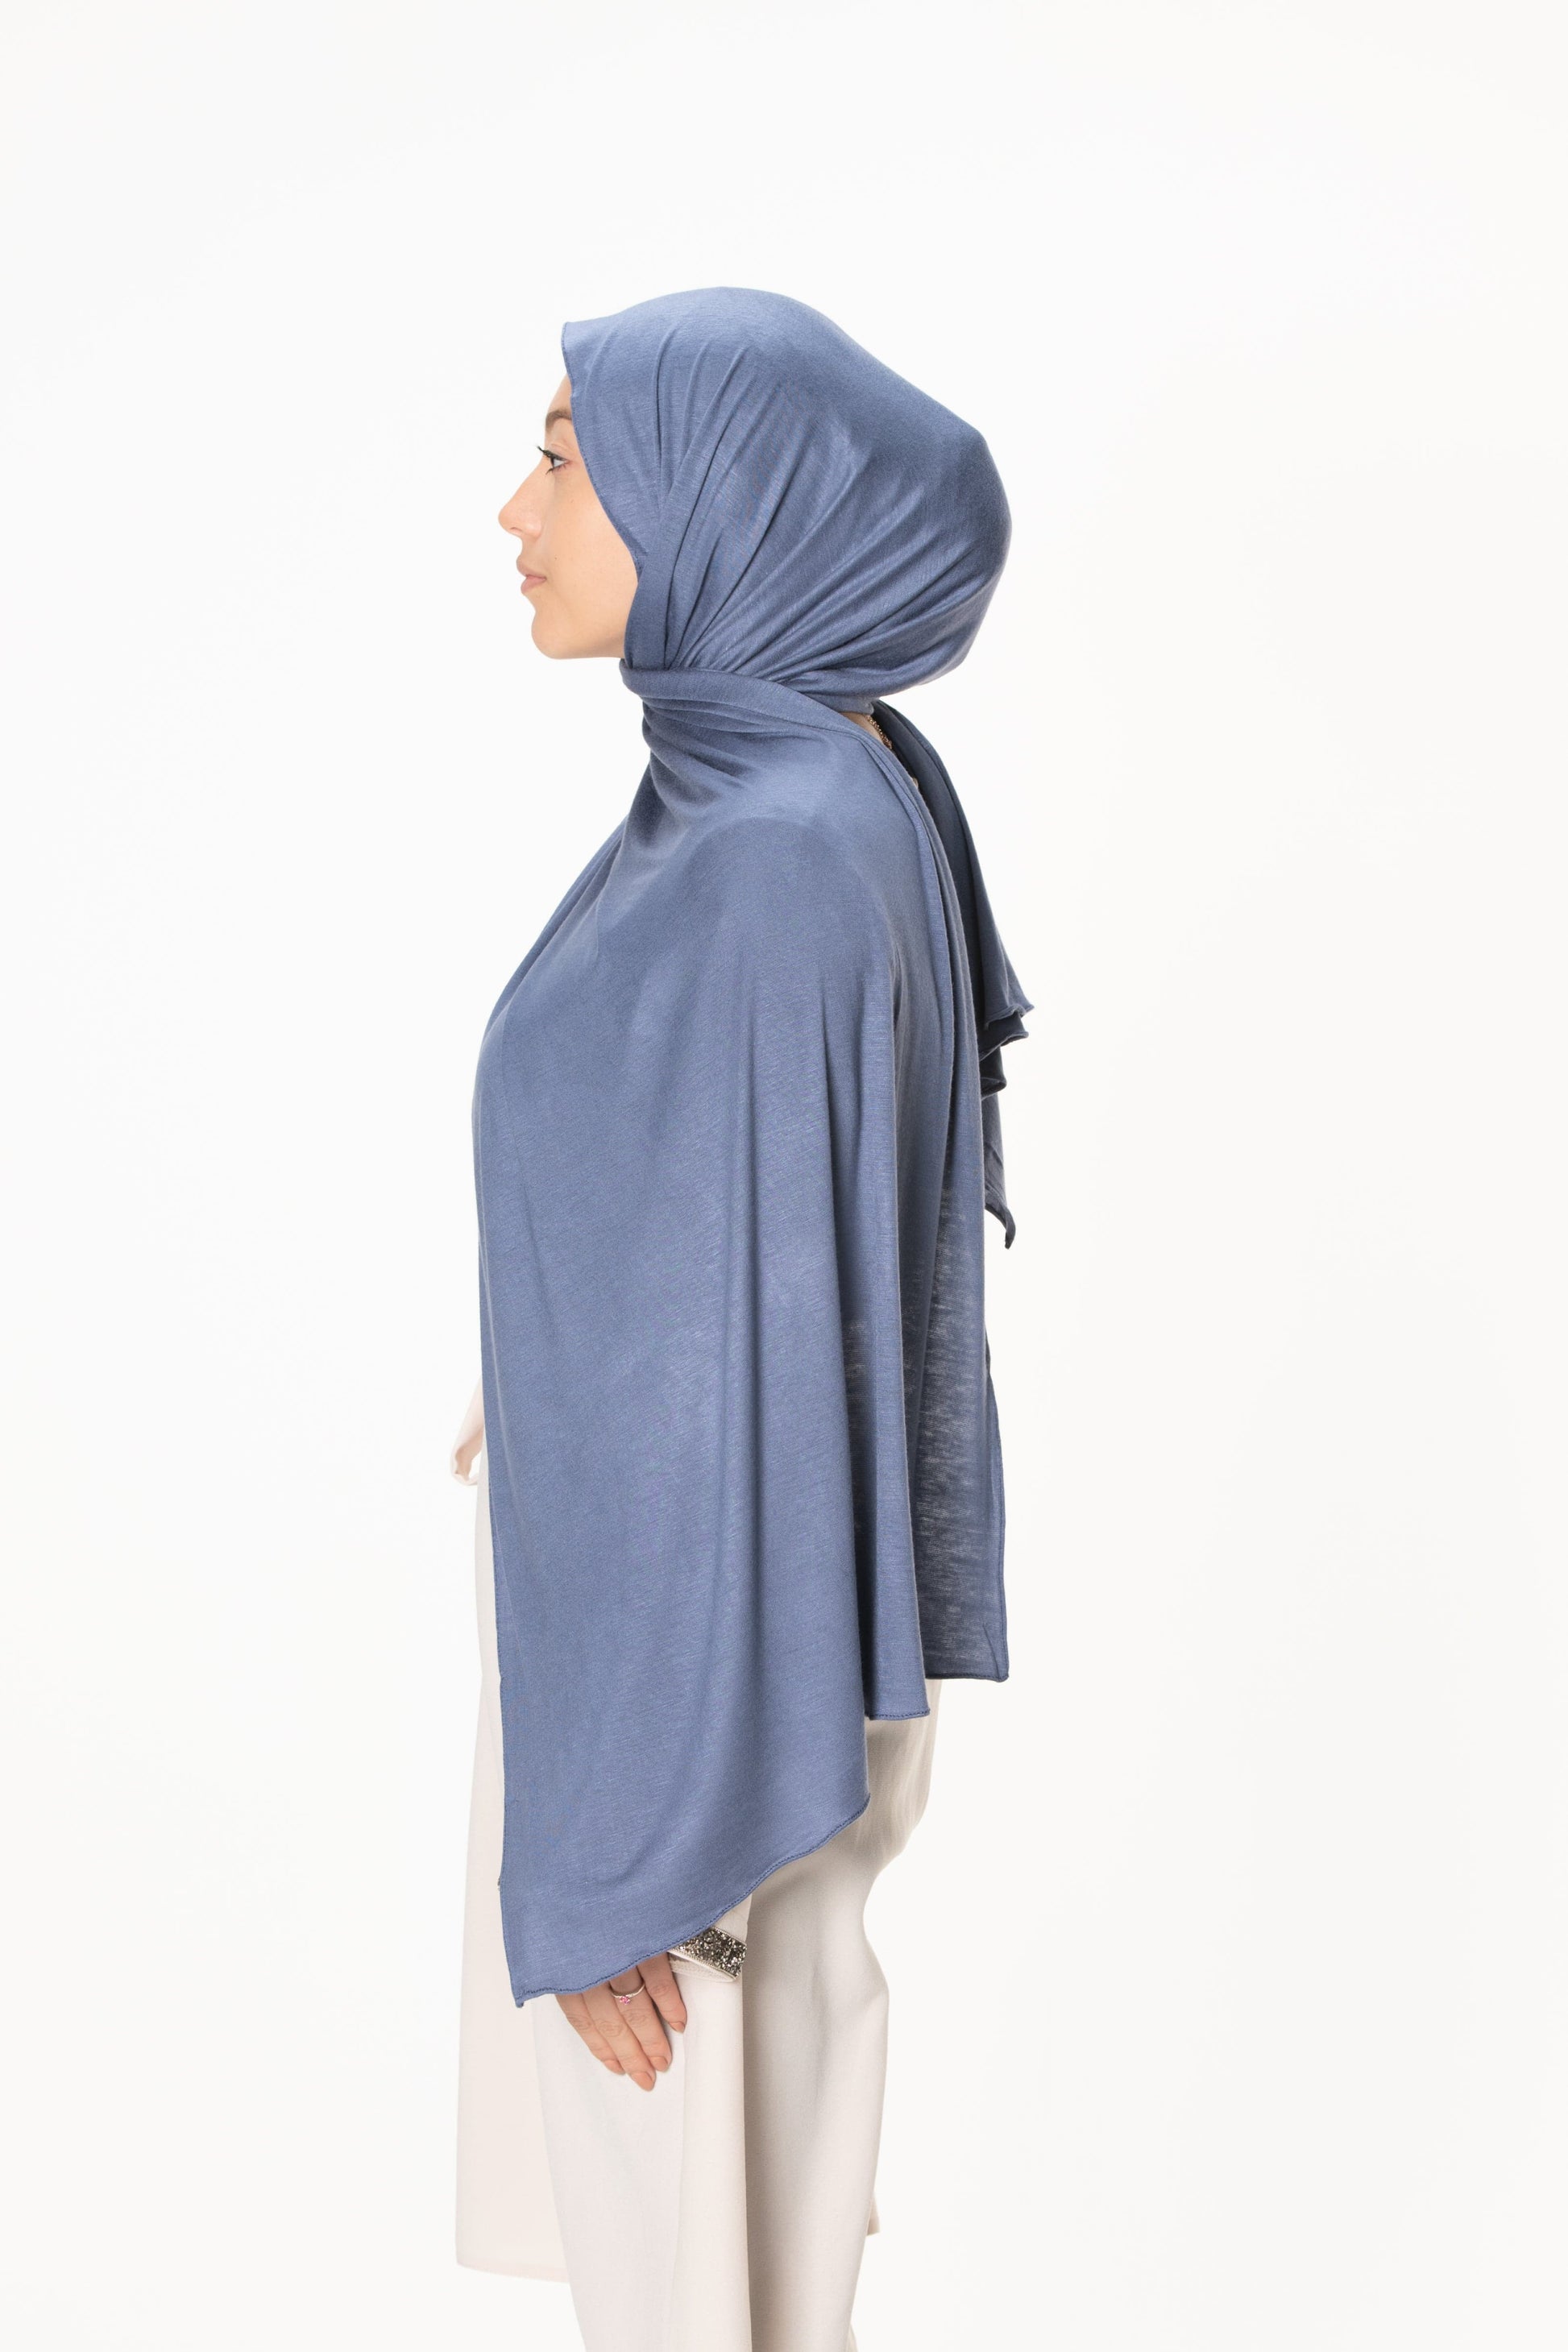 jolienisa Brisk Blue Jersey Cotton Hijab